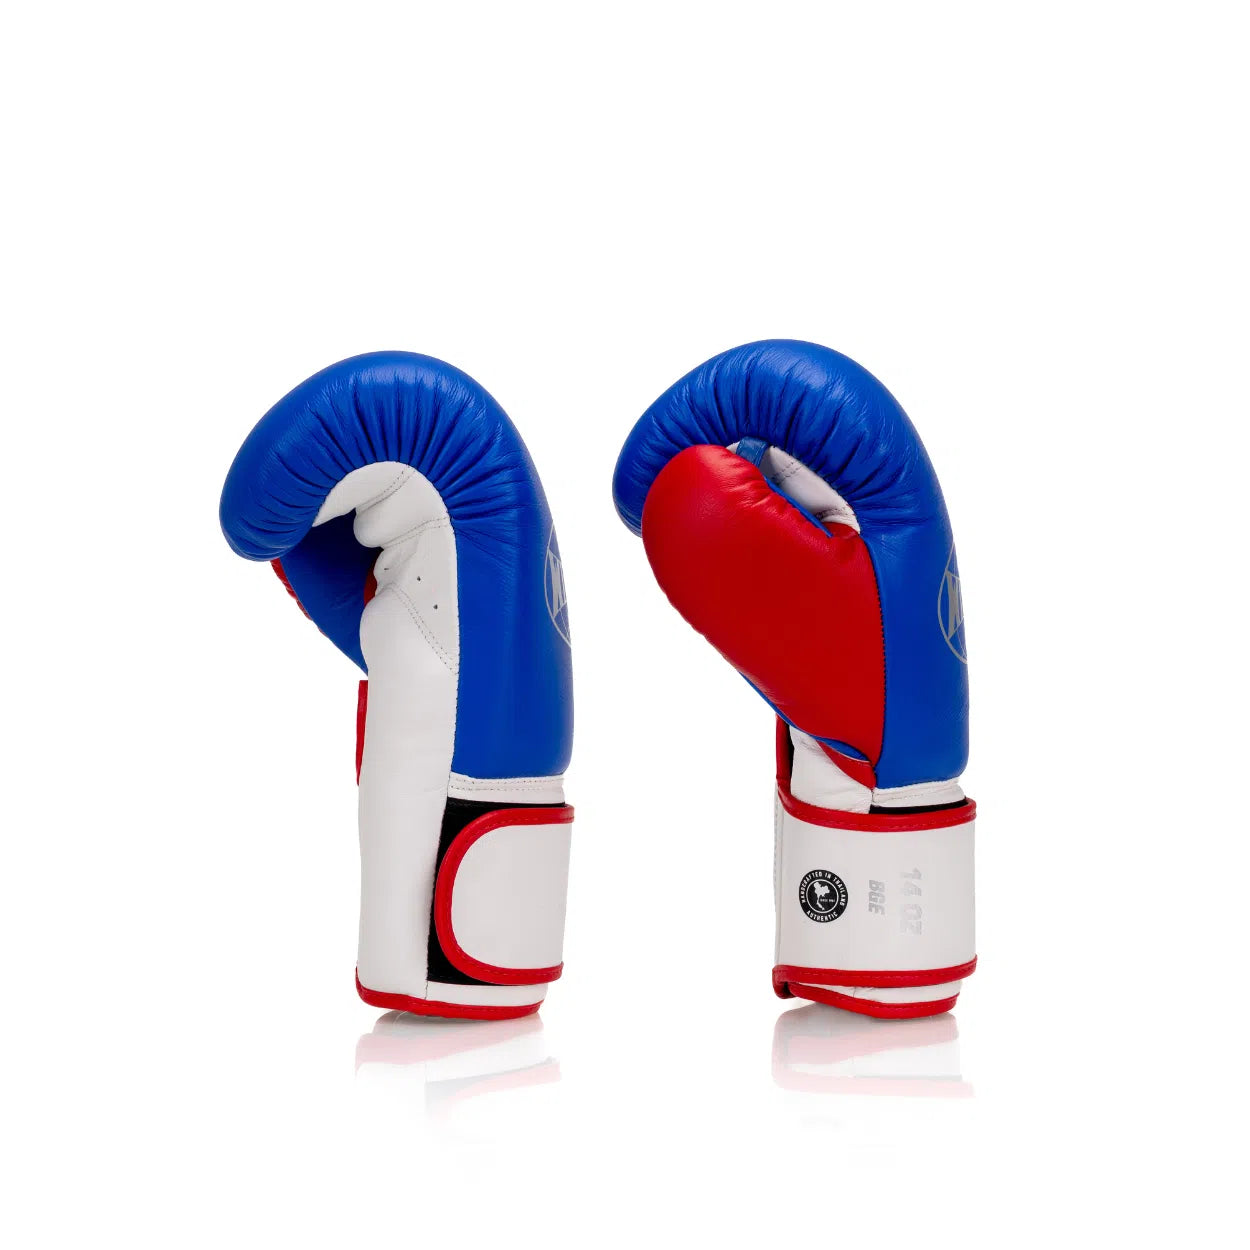 Elite Series Velcro Boxing Glove - Blue/Red/White